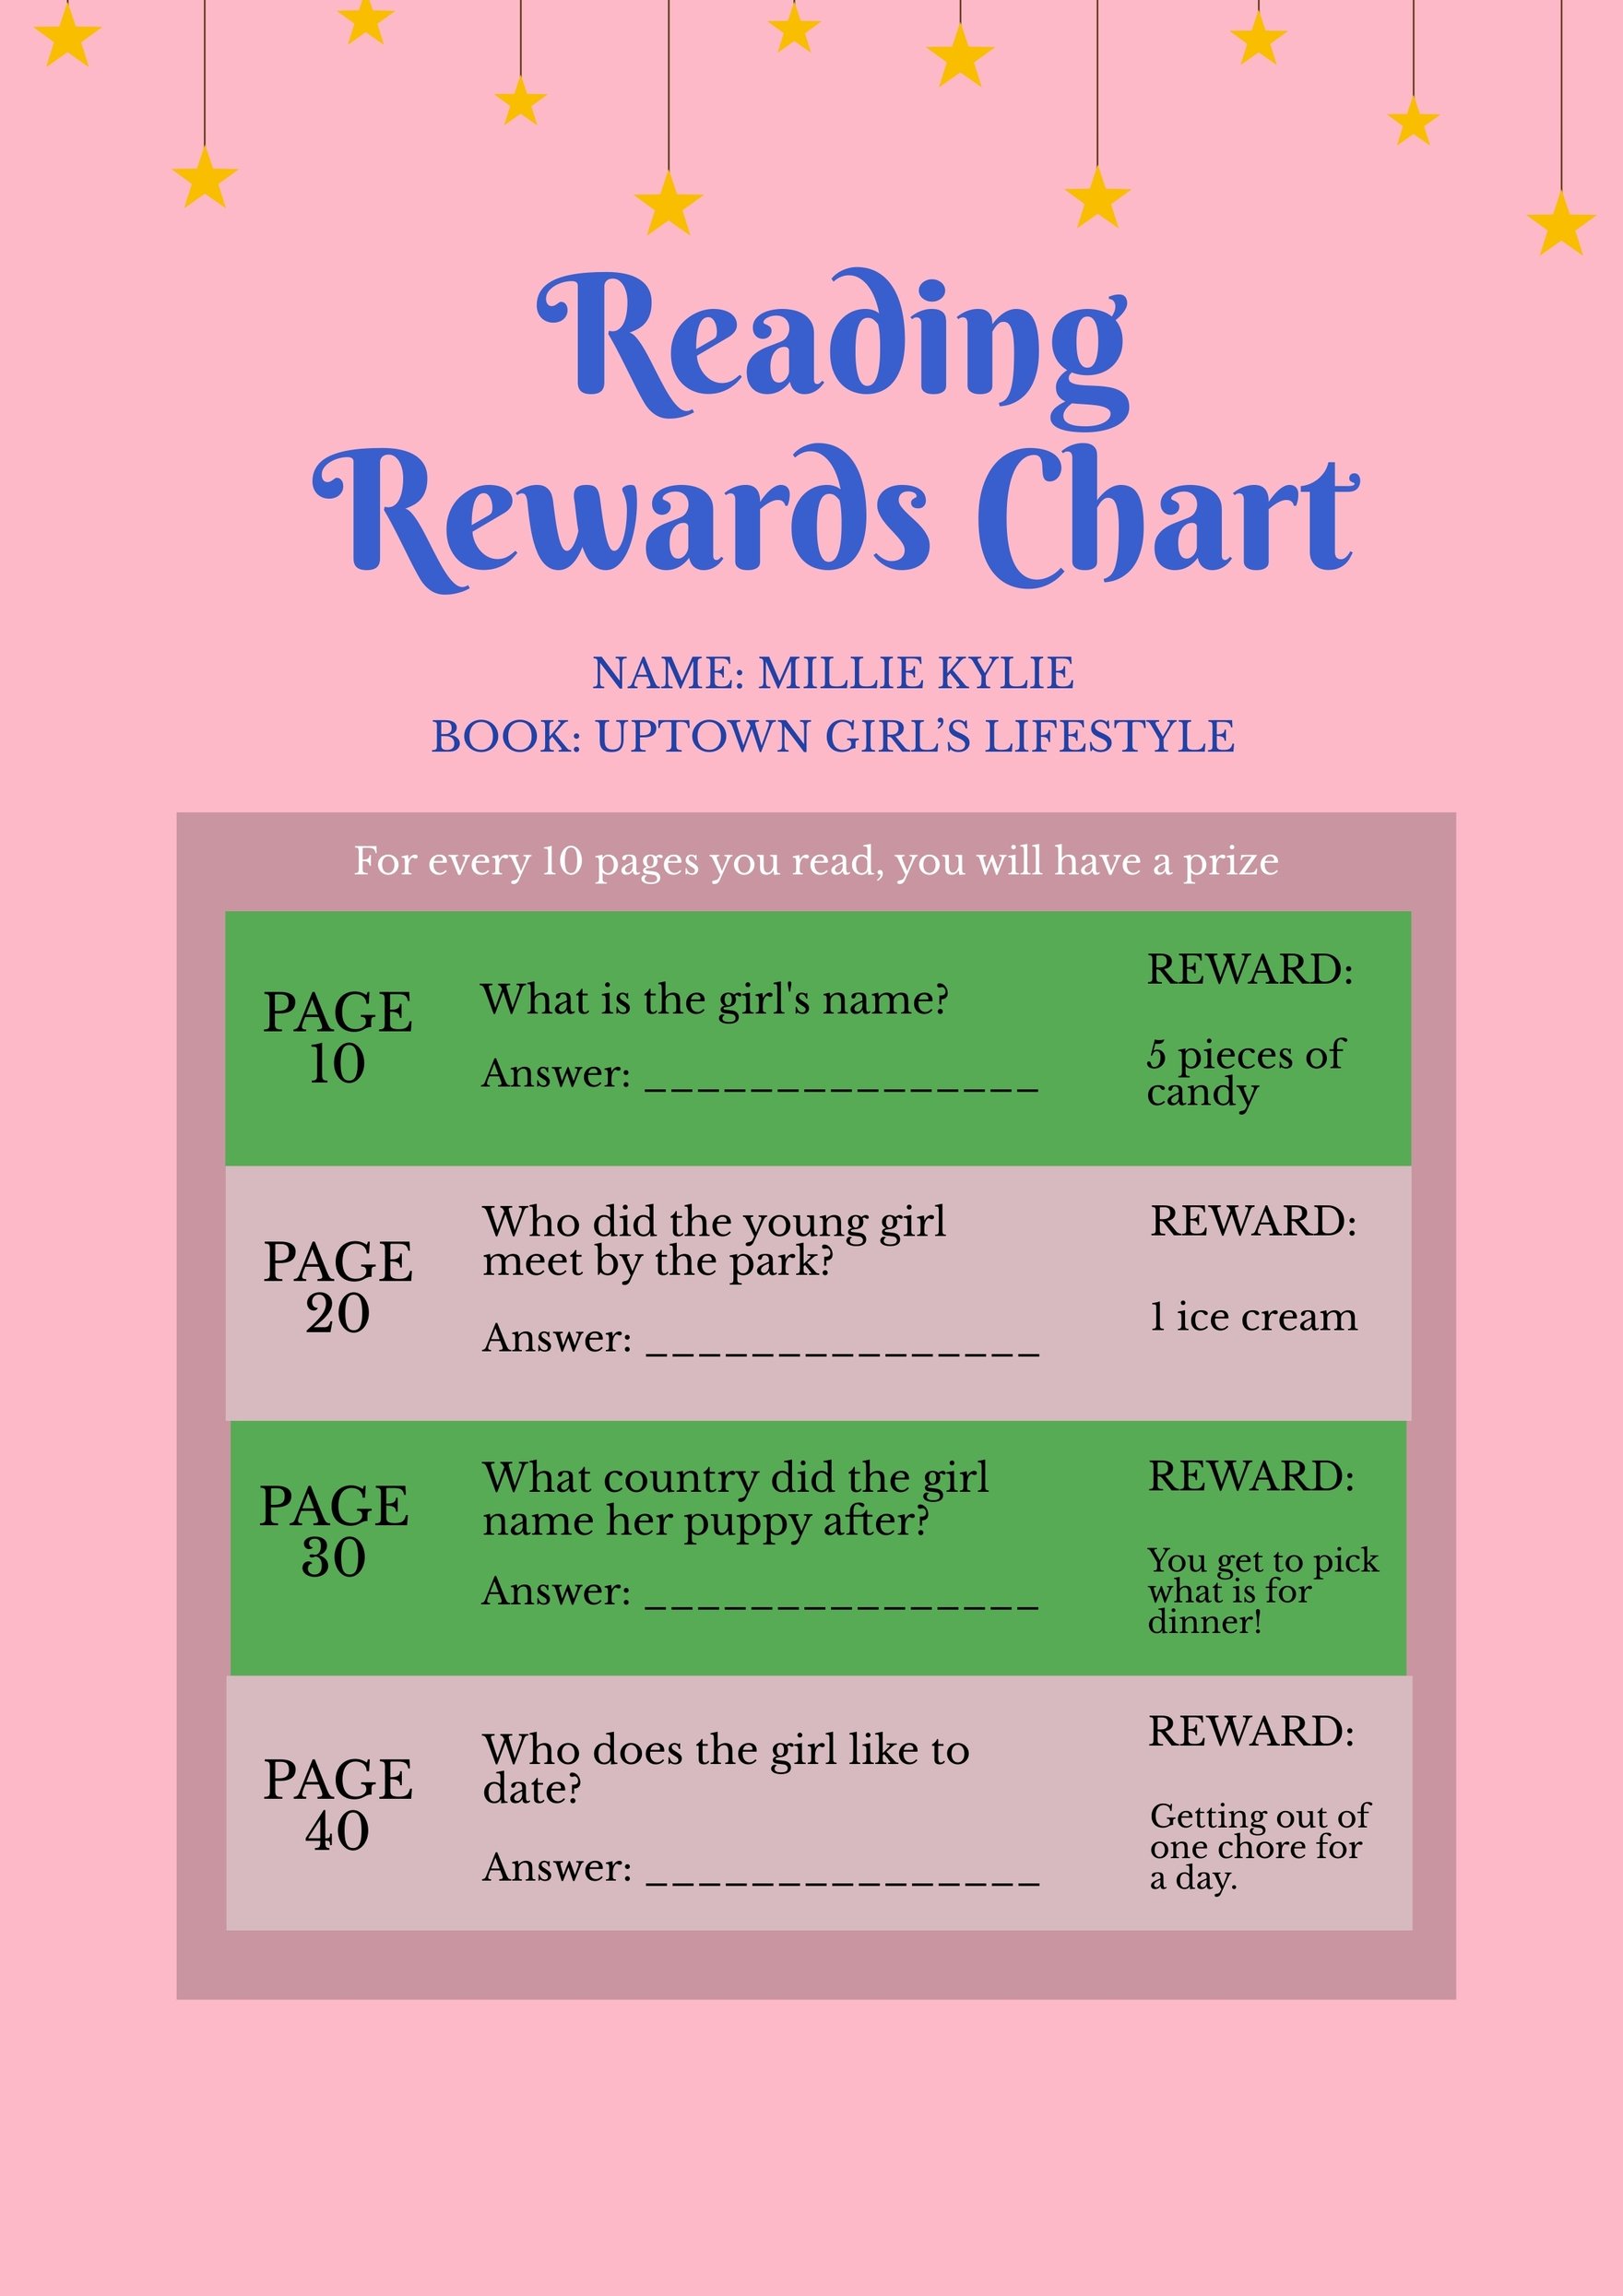 Reading Rewards Chart in PDF, Illustrator